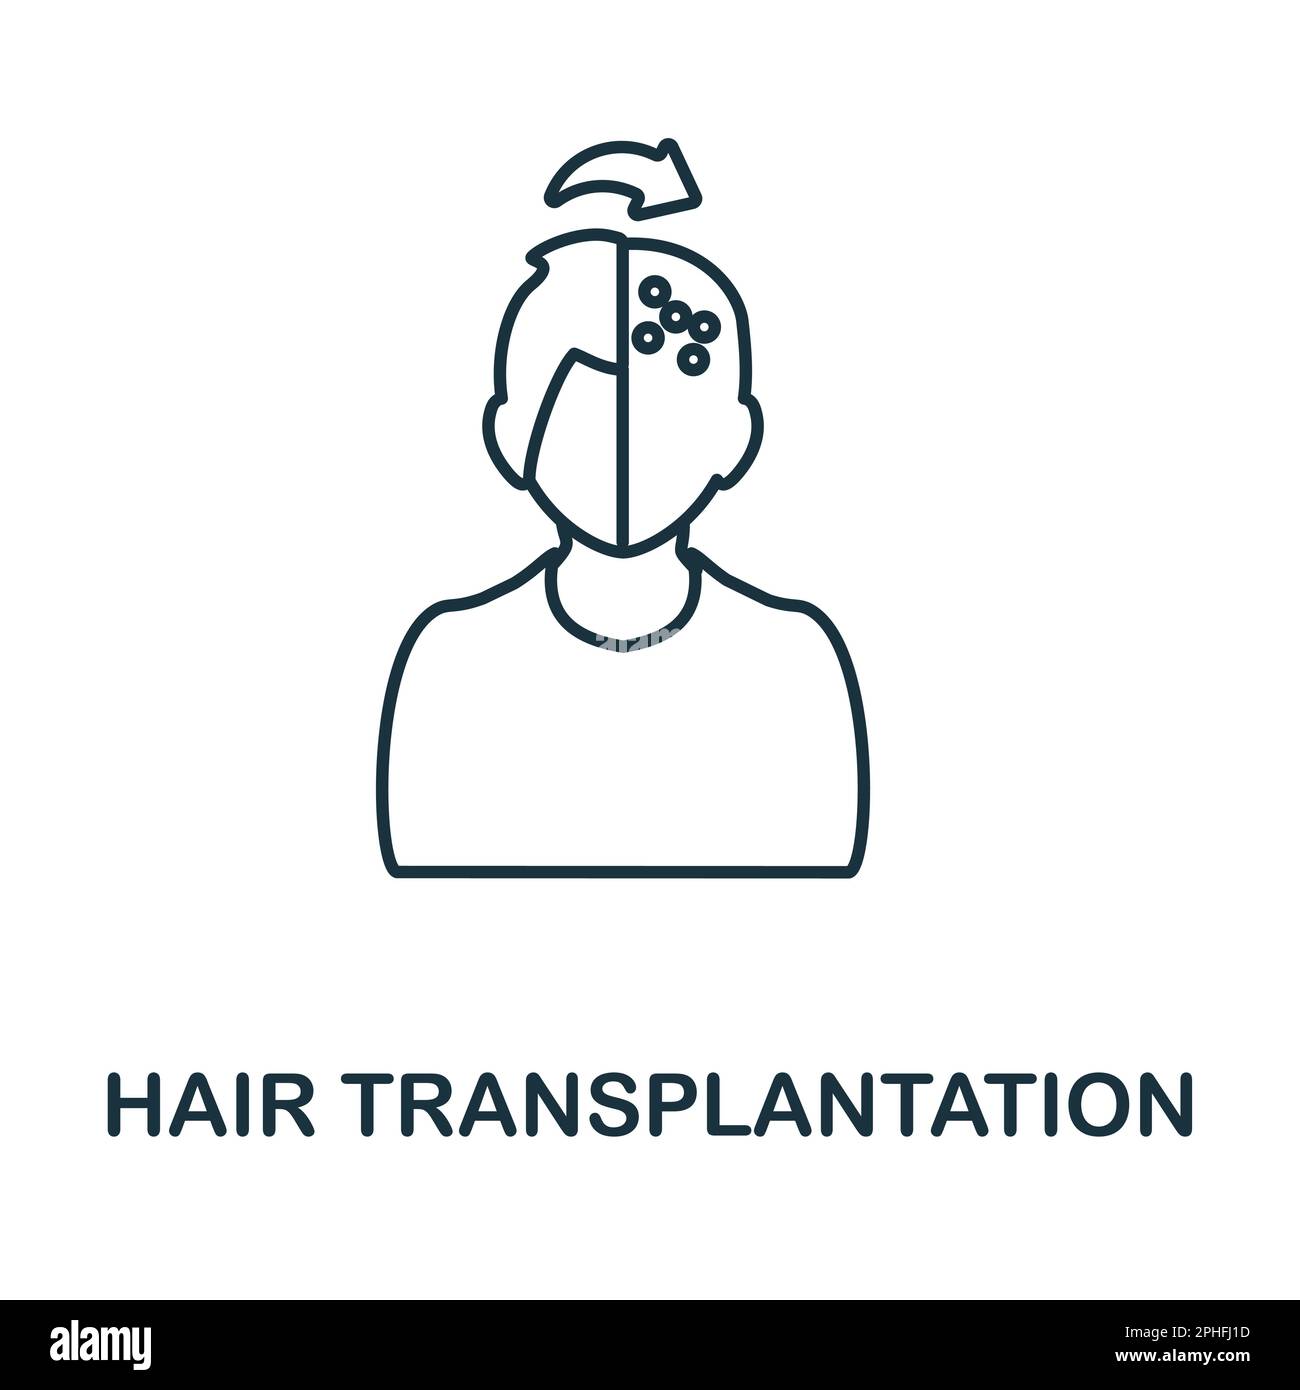 Hair Transplantation line icon. Element sign from transplantation collection. Flat Hair Transplantation outline icon sign for web design, infographics Stock Vector